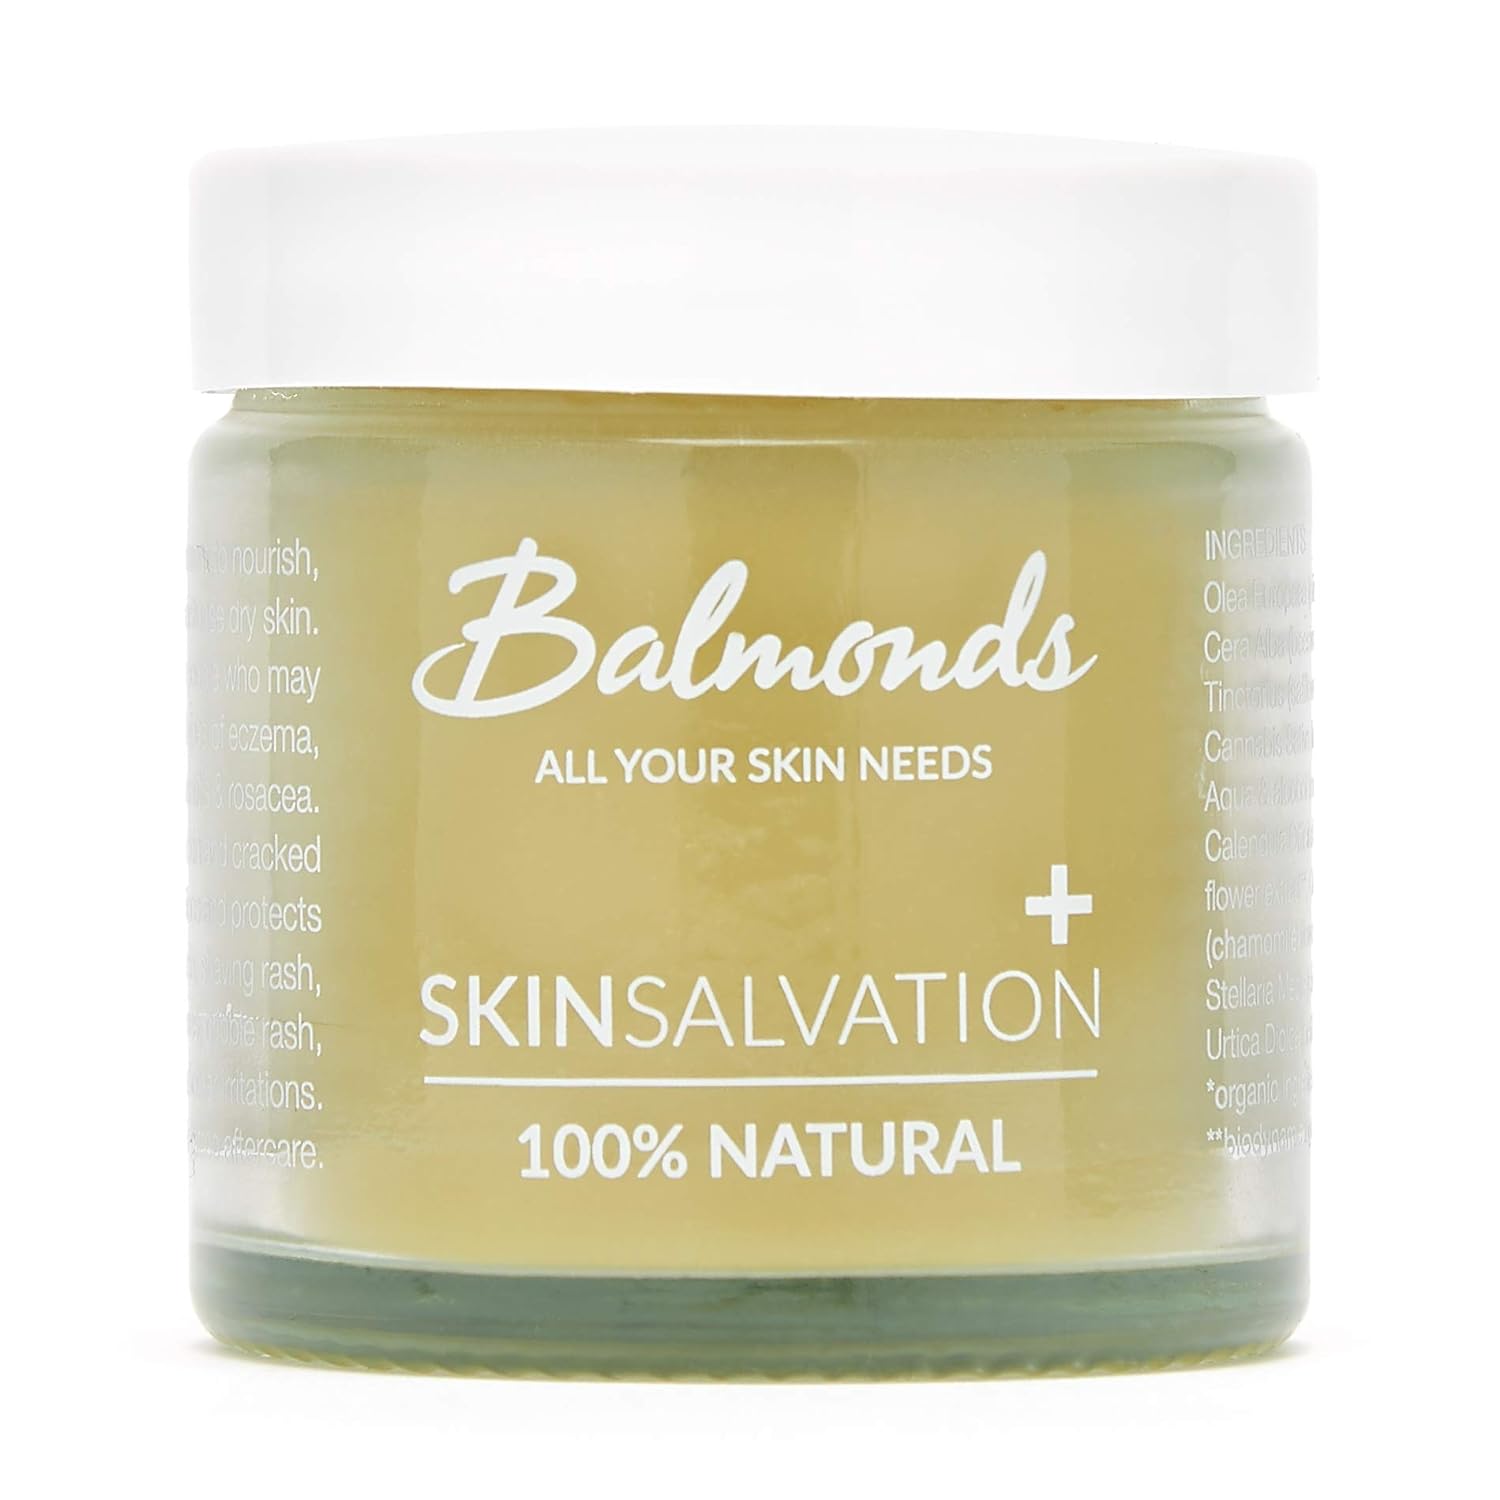 Balmonds Skin Salvation 2.1 fl oz (60 ml) - Salve for Dry, Rough & Sensitive Skin – All-Purpose Intensive Moisturizer with Calendula, Hemp & Beeswax – 100% Natural Balm & Cruelty Free